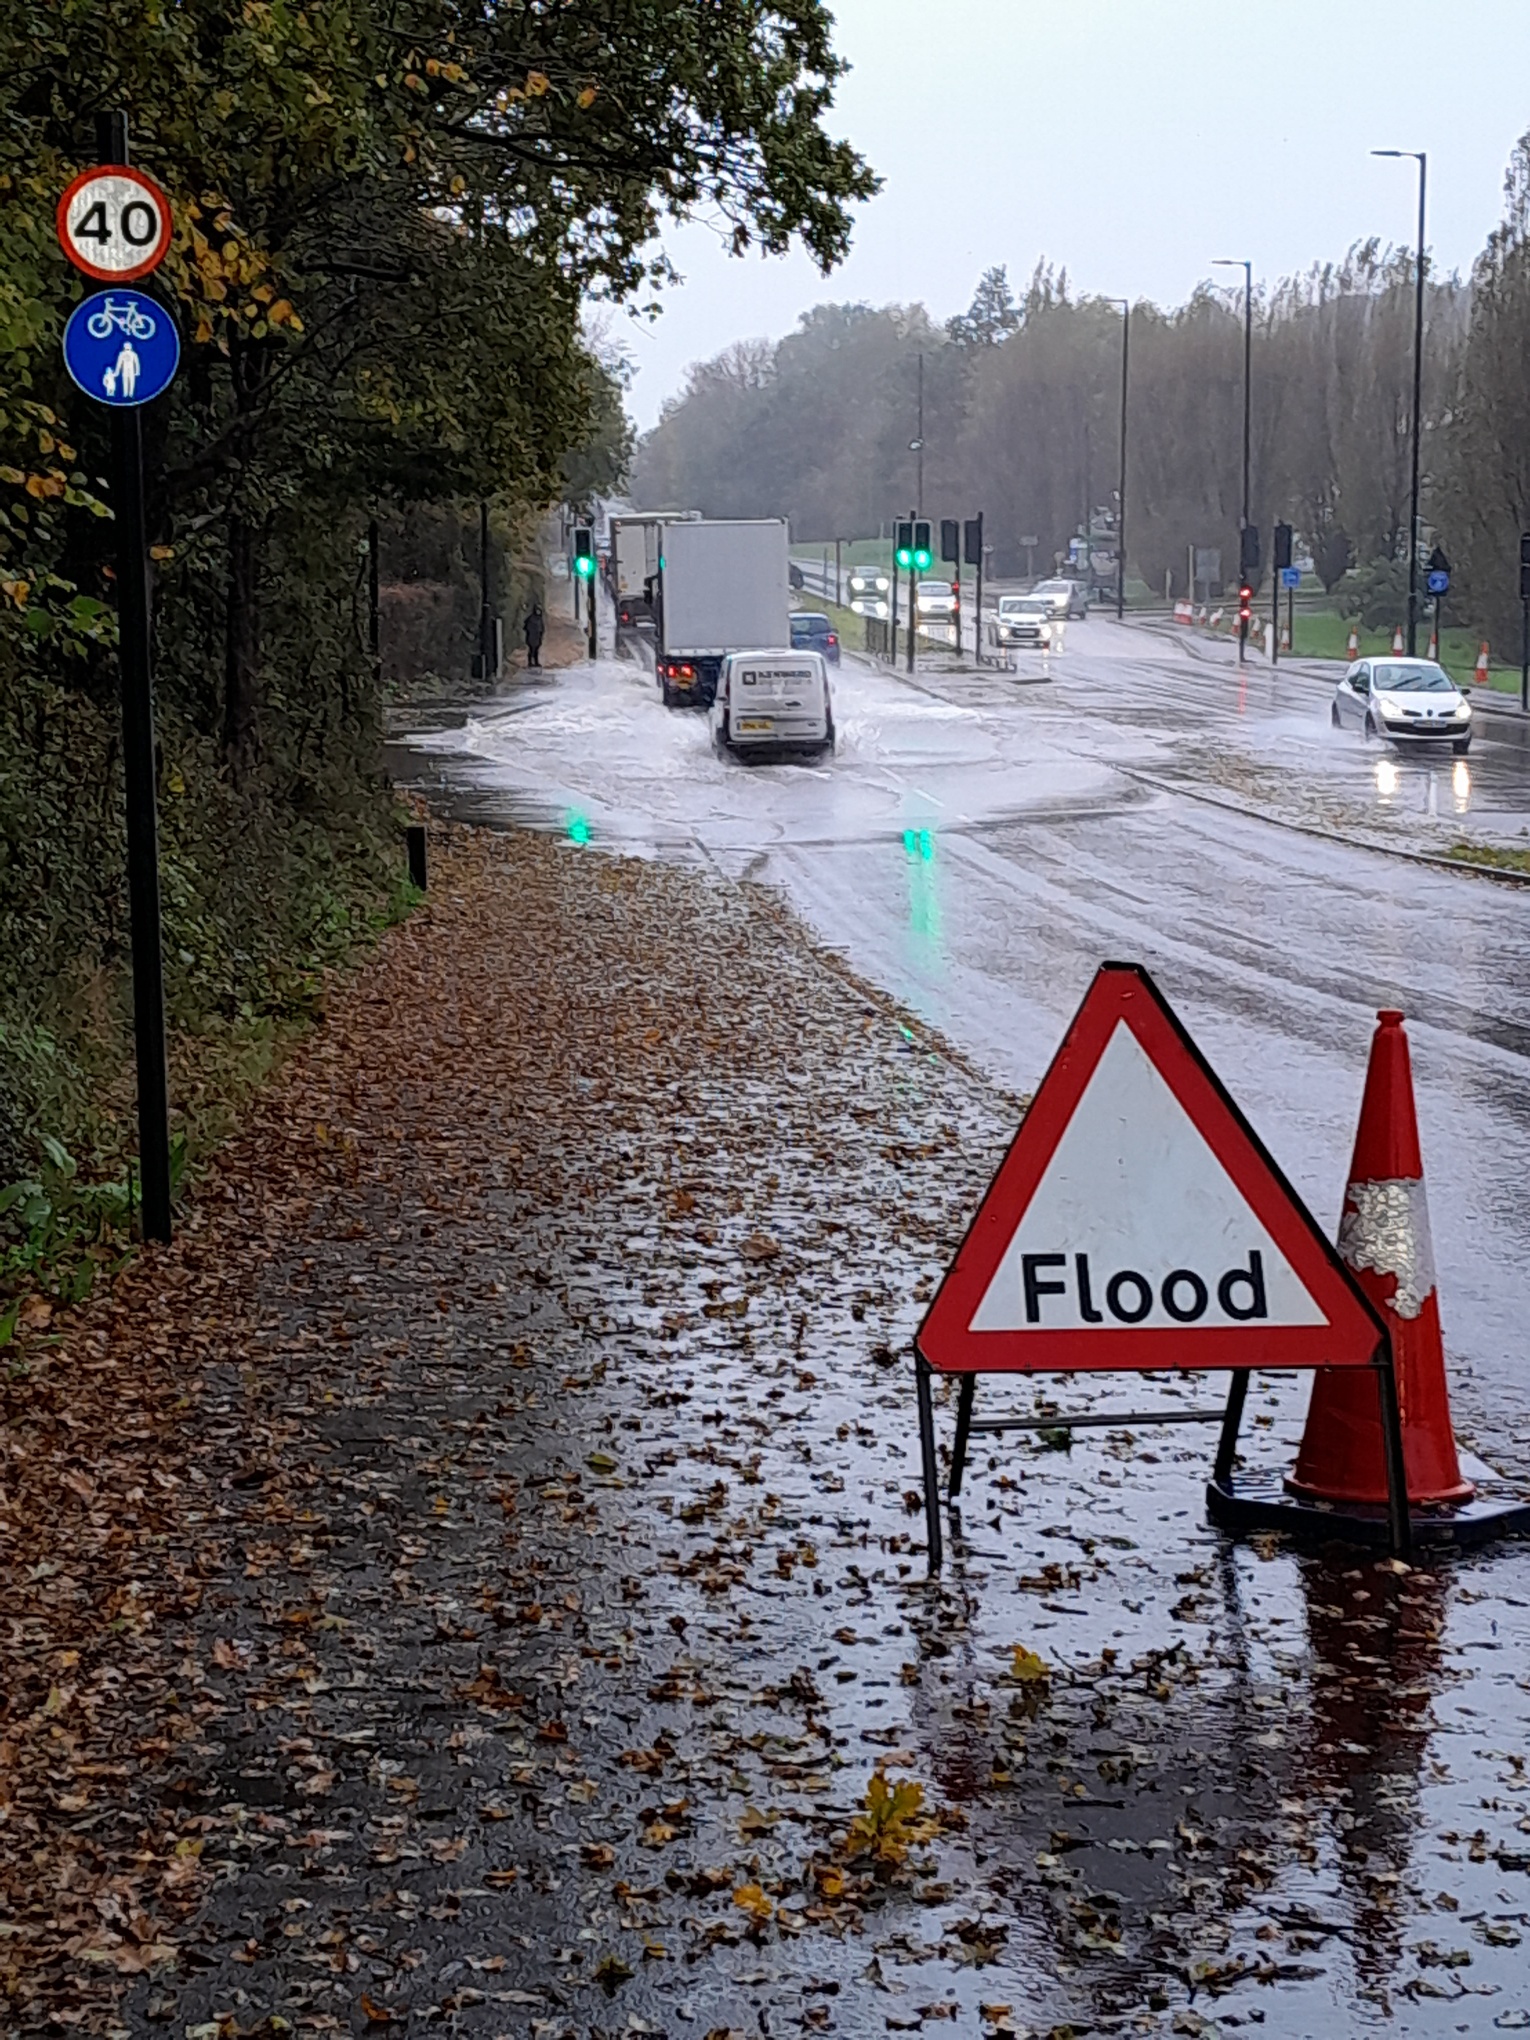 Flood sign in advance of flood in Parkhurst Road